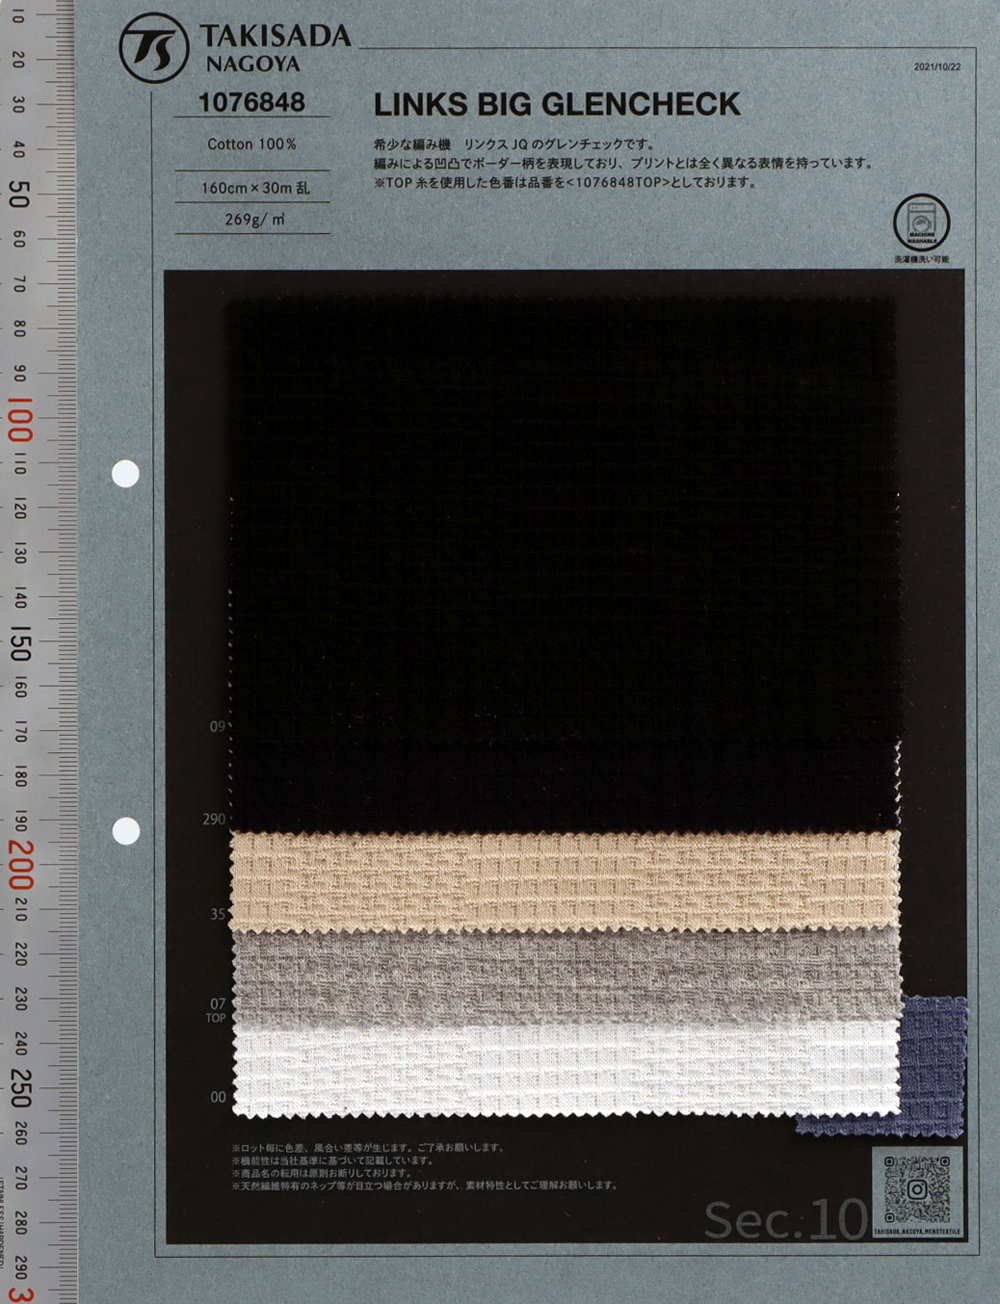 1076848 ENLACES Cheque Glen[Fabrica Textil] Takisada Nagoya